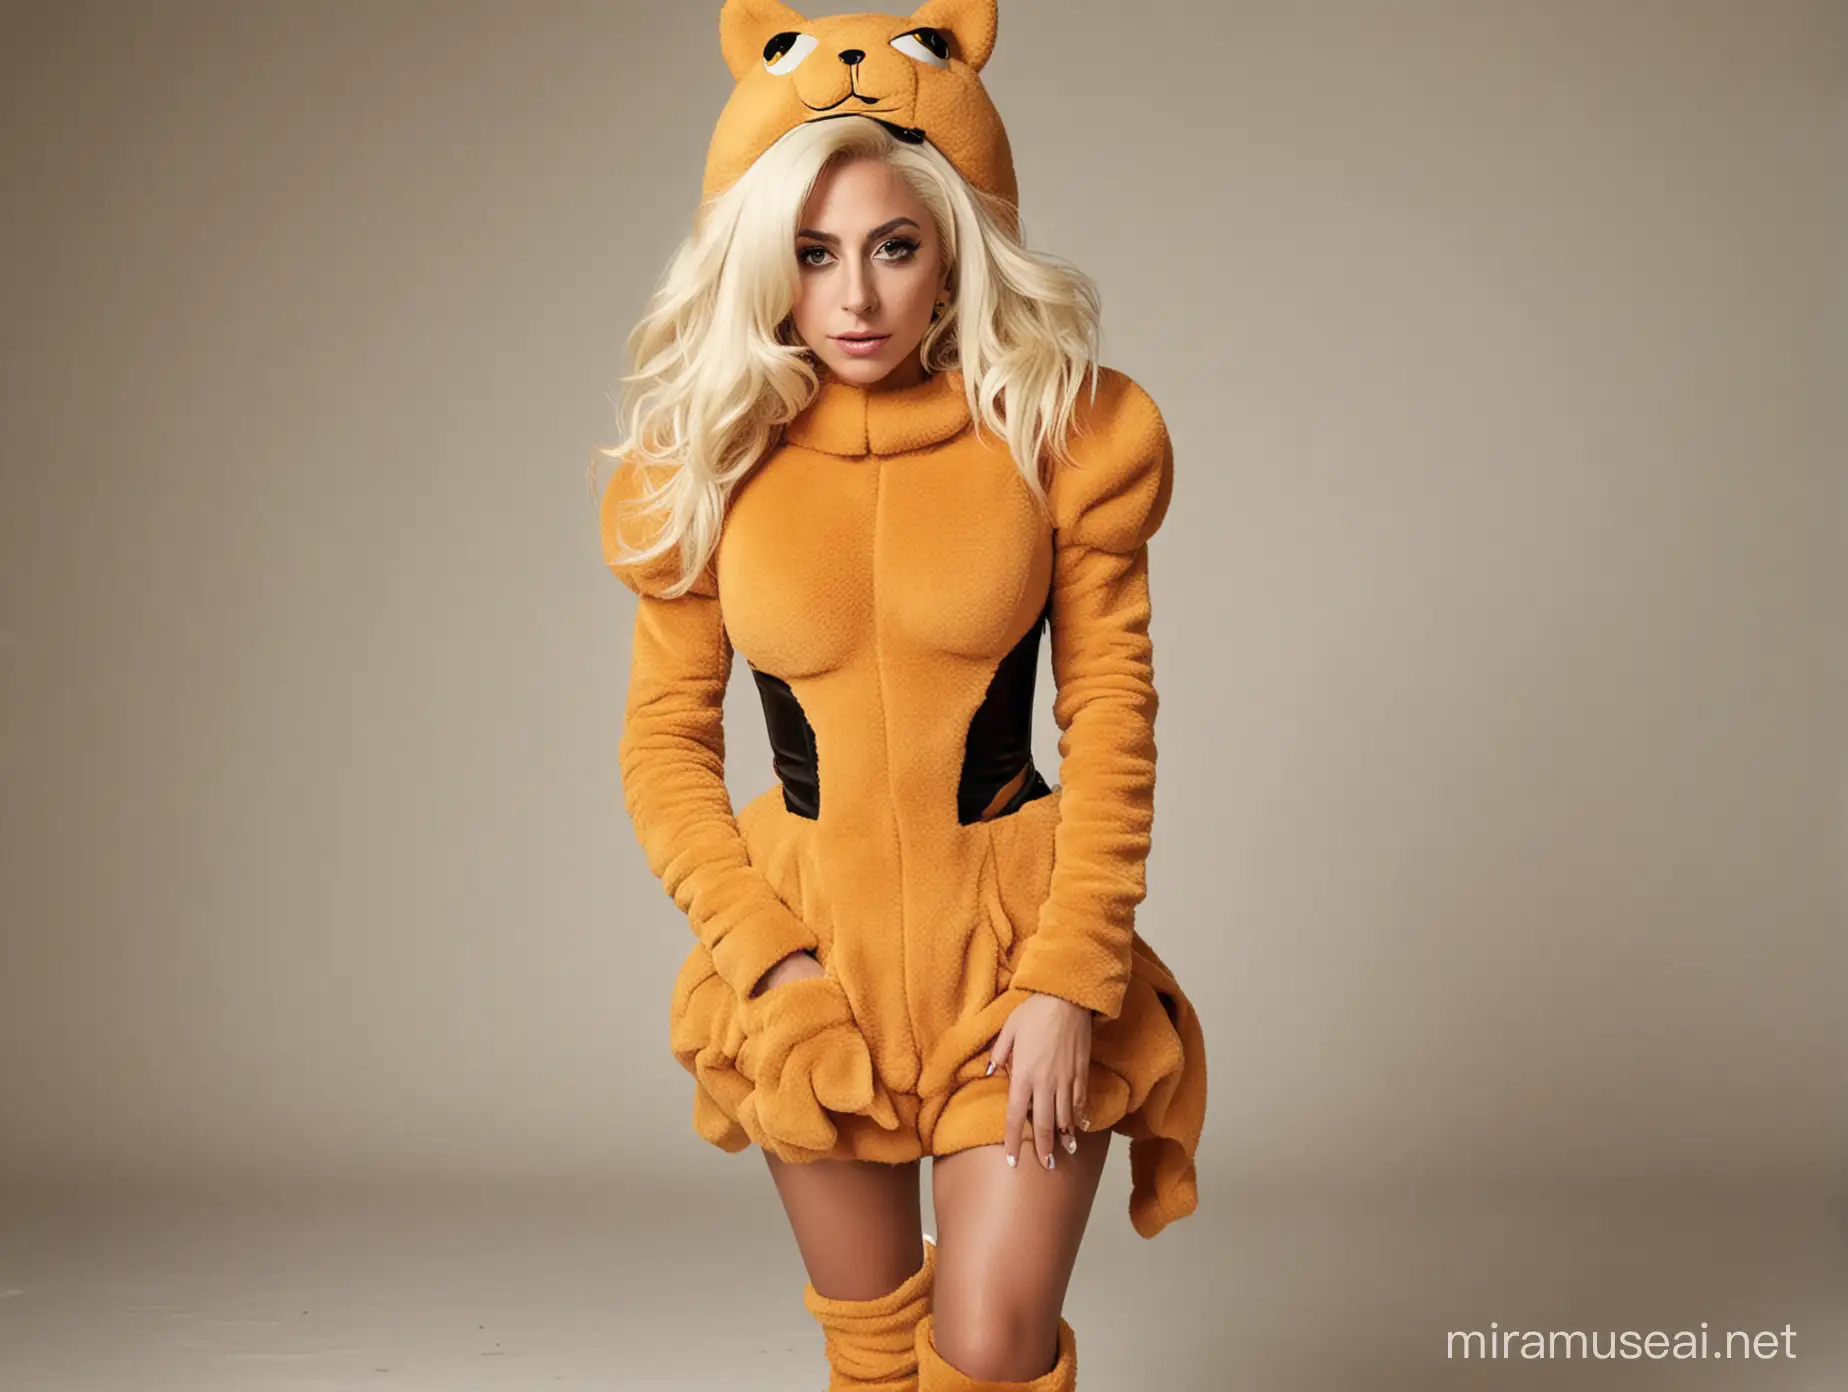 Lady Gaga dressed in a Garfield costum